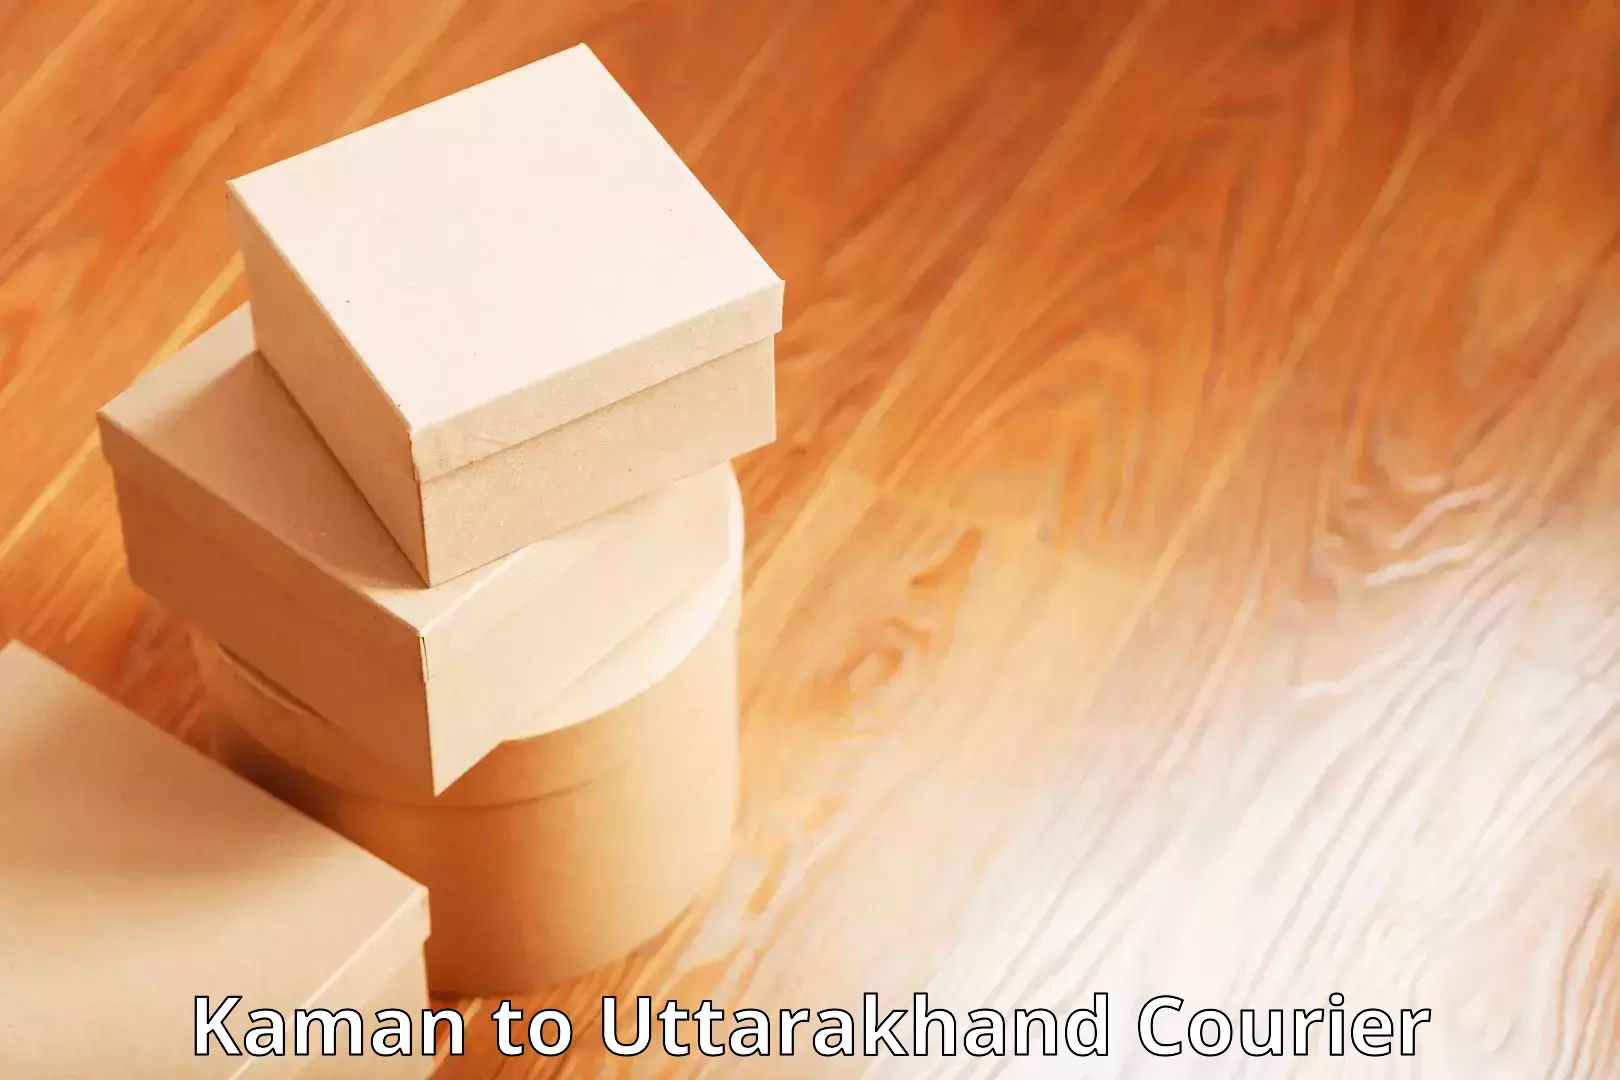 Shipping and handling Kaman to Uttarakhand